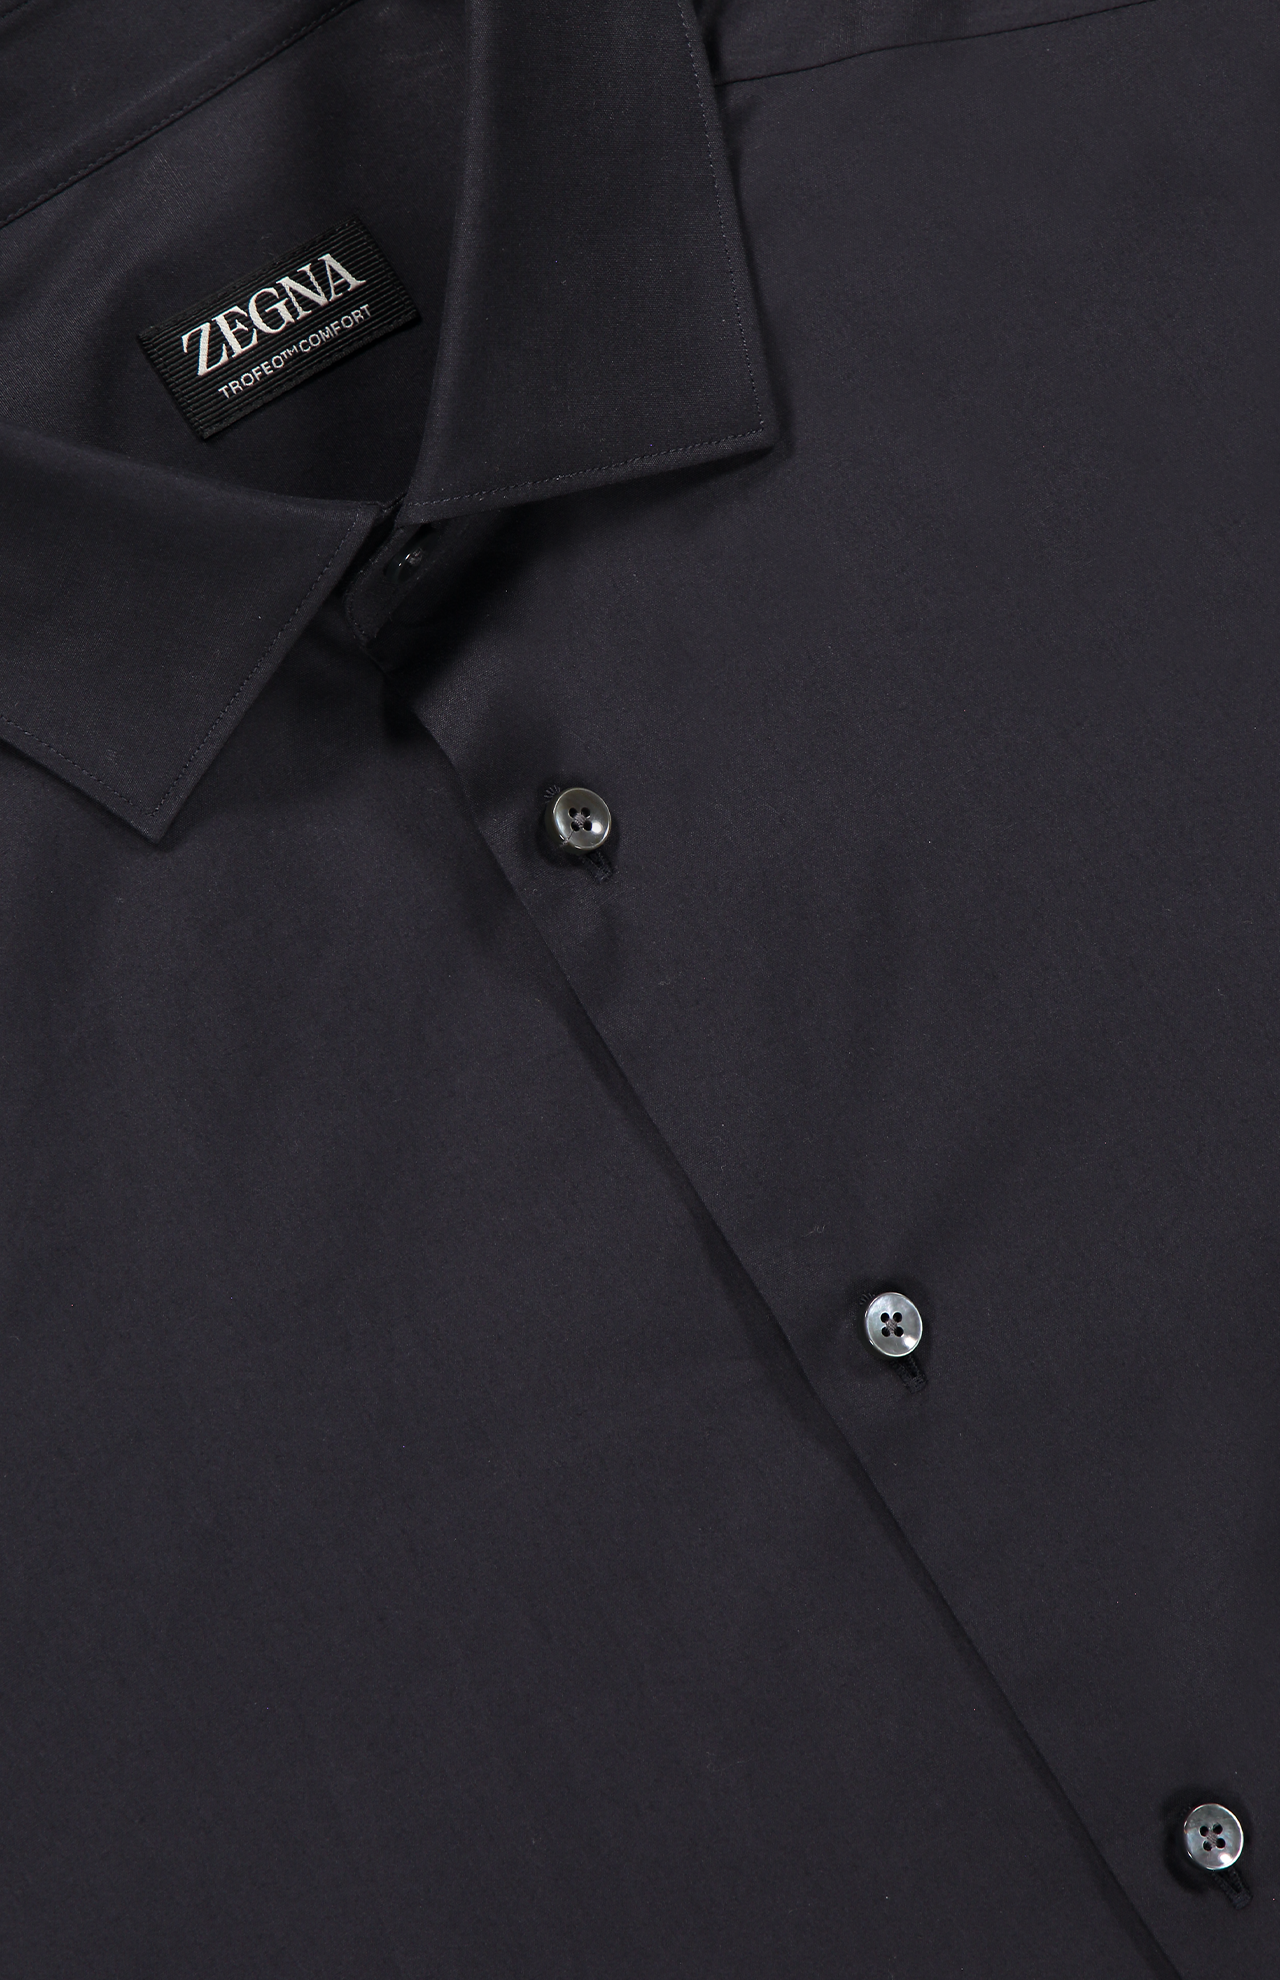 Zegna Trofeo Comfort Shirt Collar Detail Shot (6931227017331)